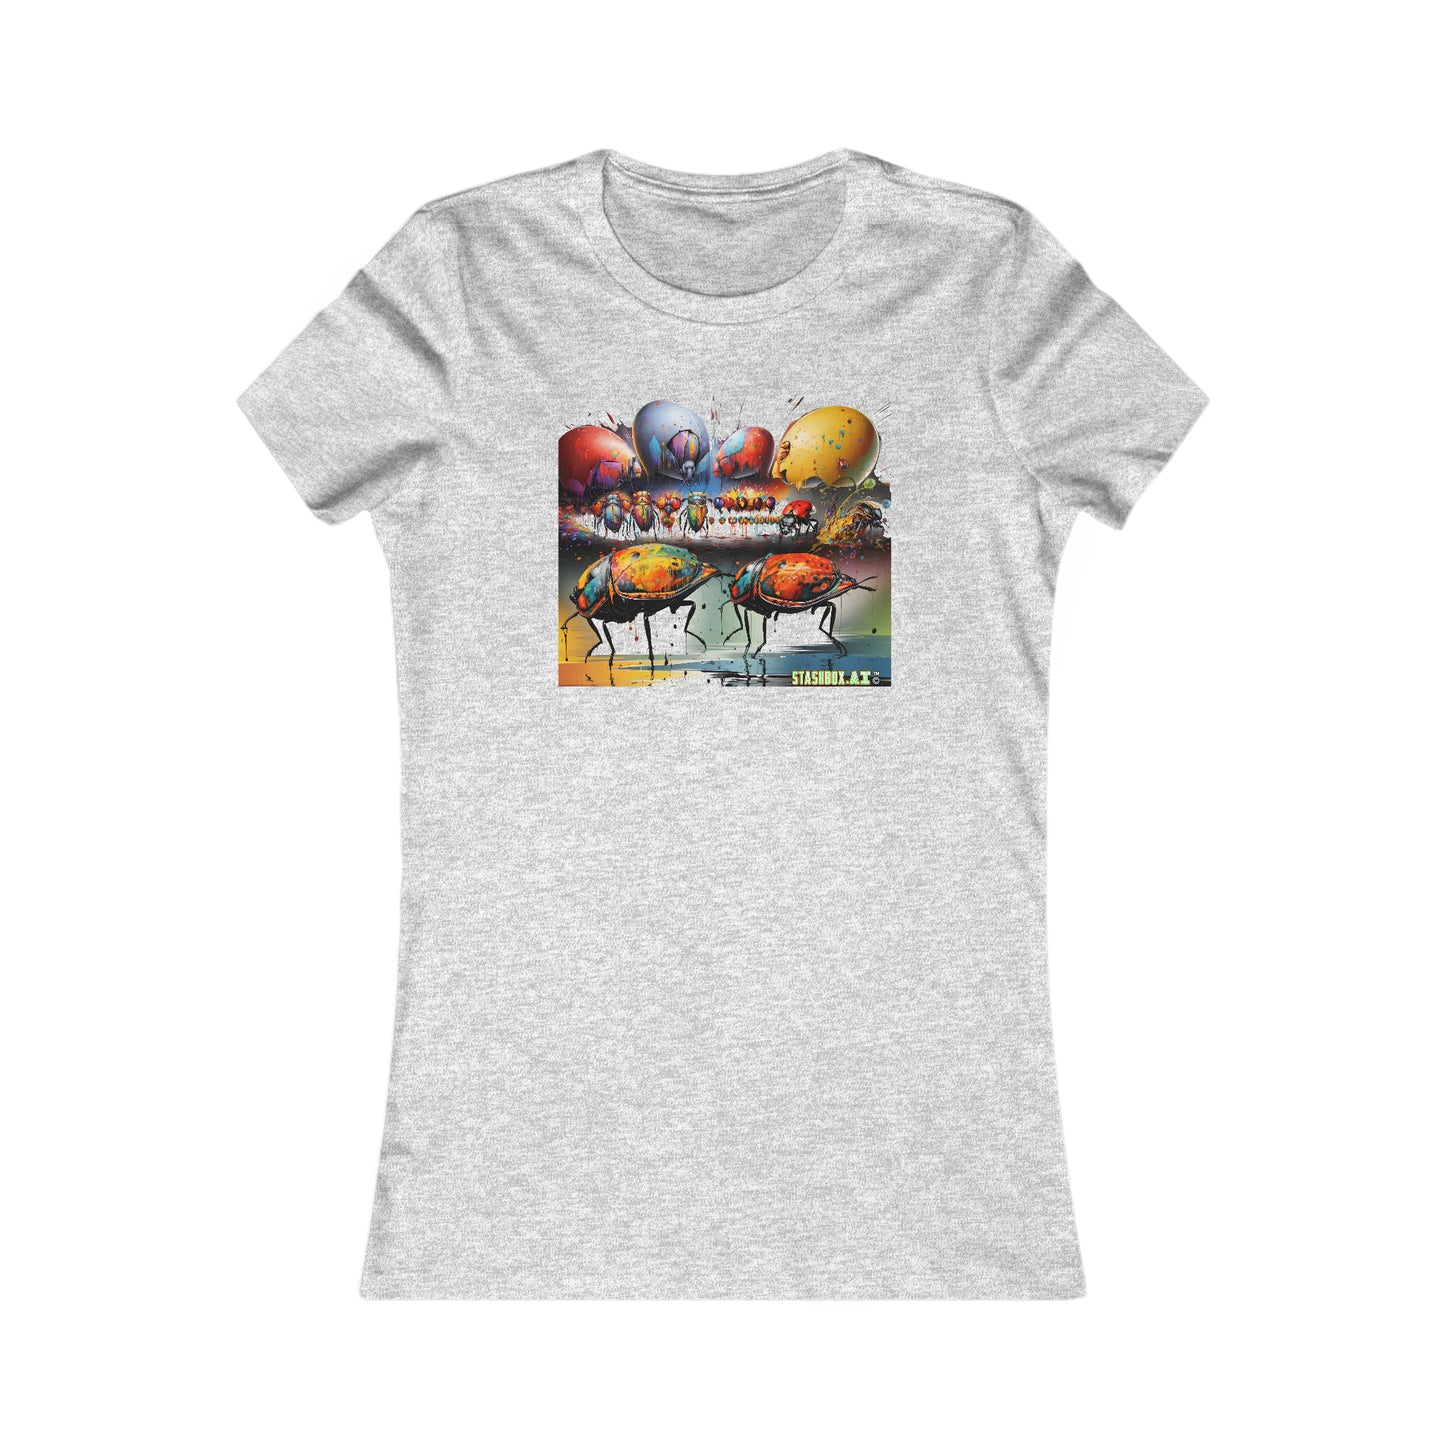 Women's Favorite Tee Vibrant Color Bugs 002 T-Shirt